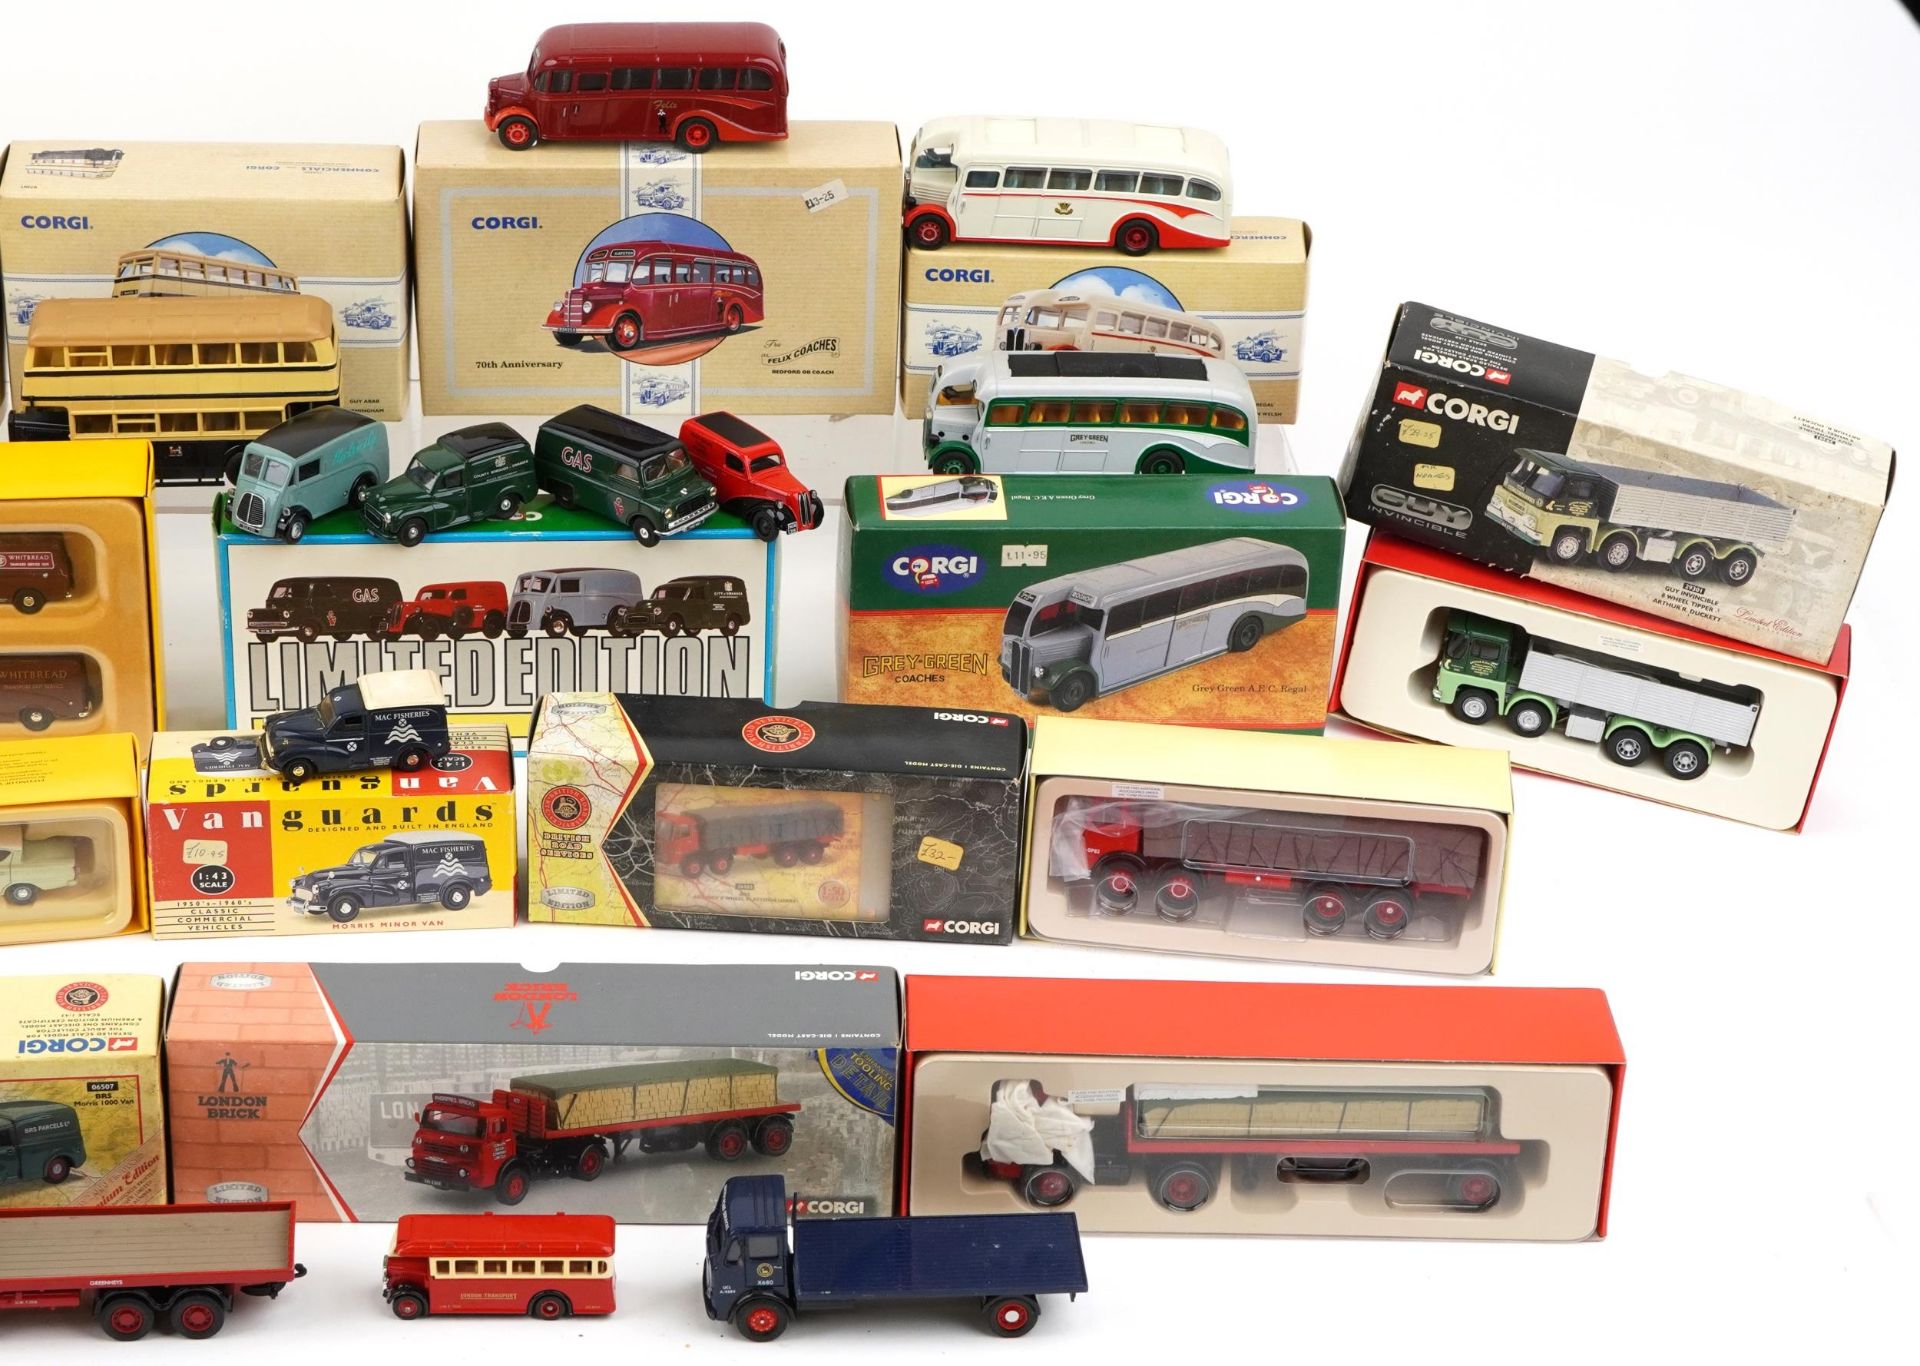 Diecast model vehicles with boxes including Corgi London Brick, Corgi Buses and Vanguards - Image 3 of 3